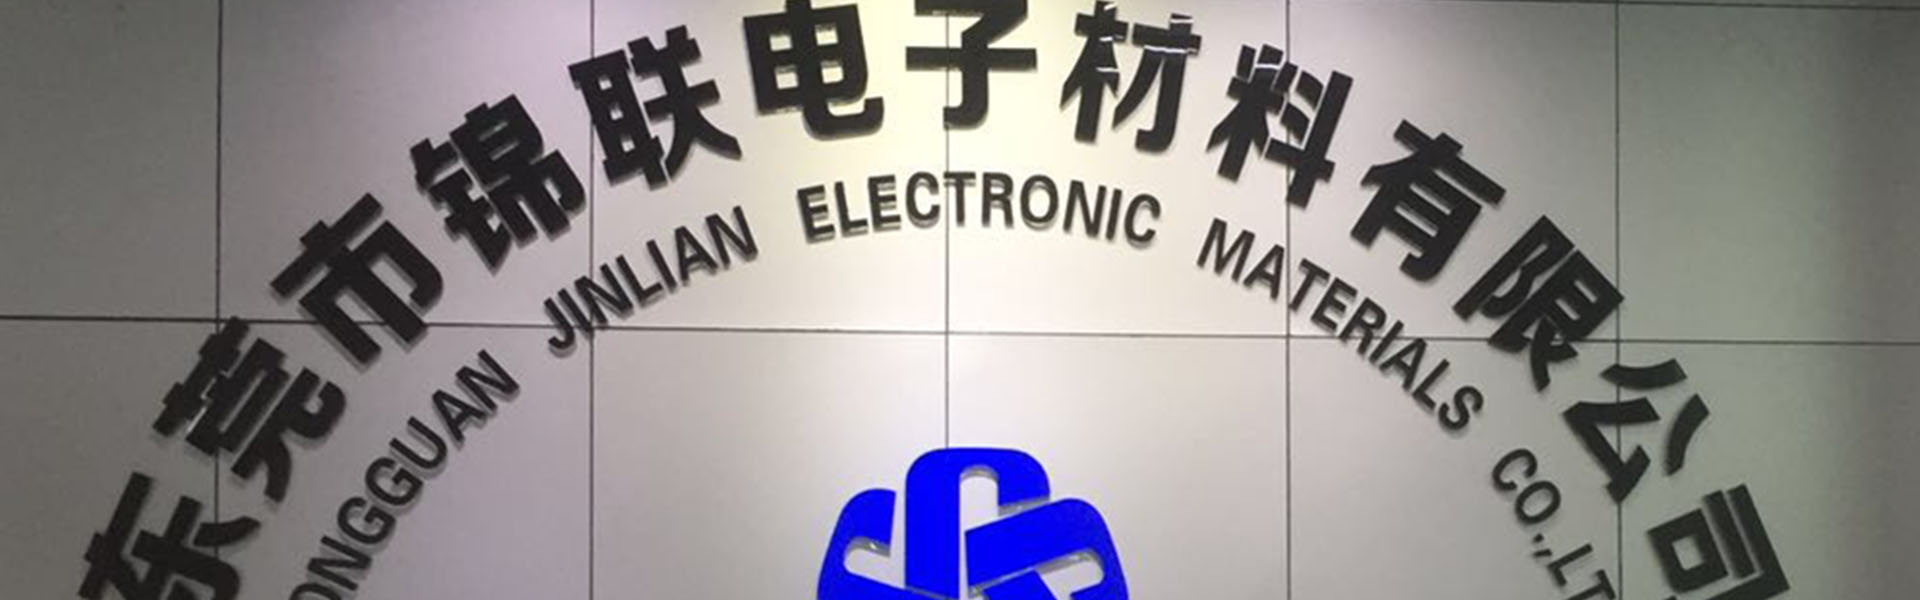 Hộp phồng rộp, khay, băng mang theo,Dongguan Jinlian Electronic Materials Co., Ltd